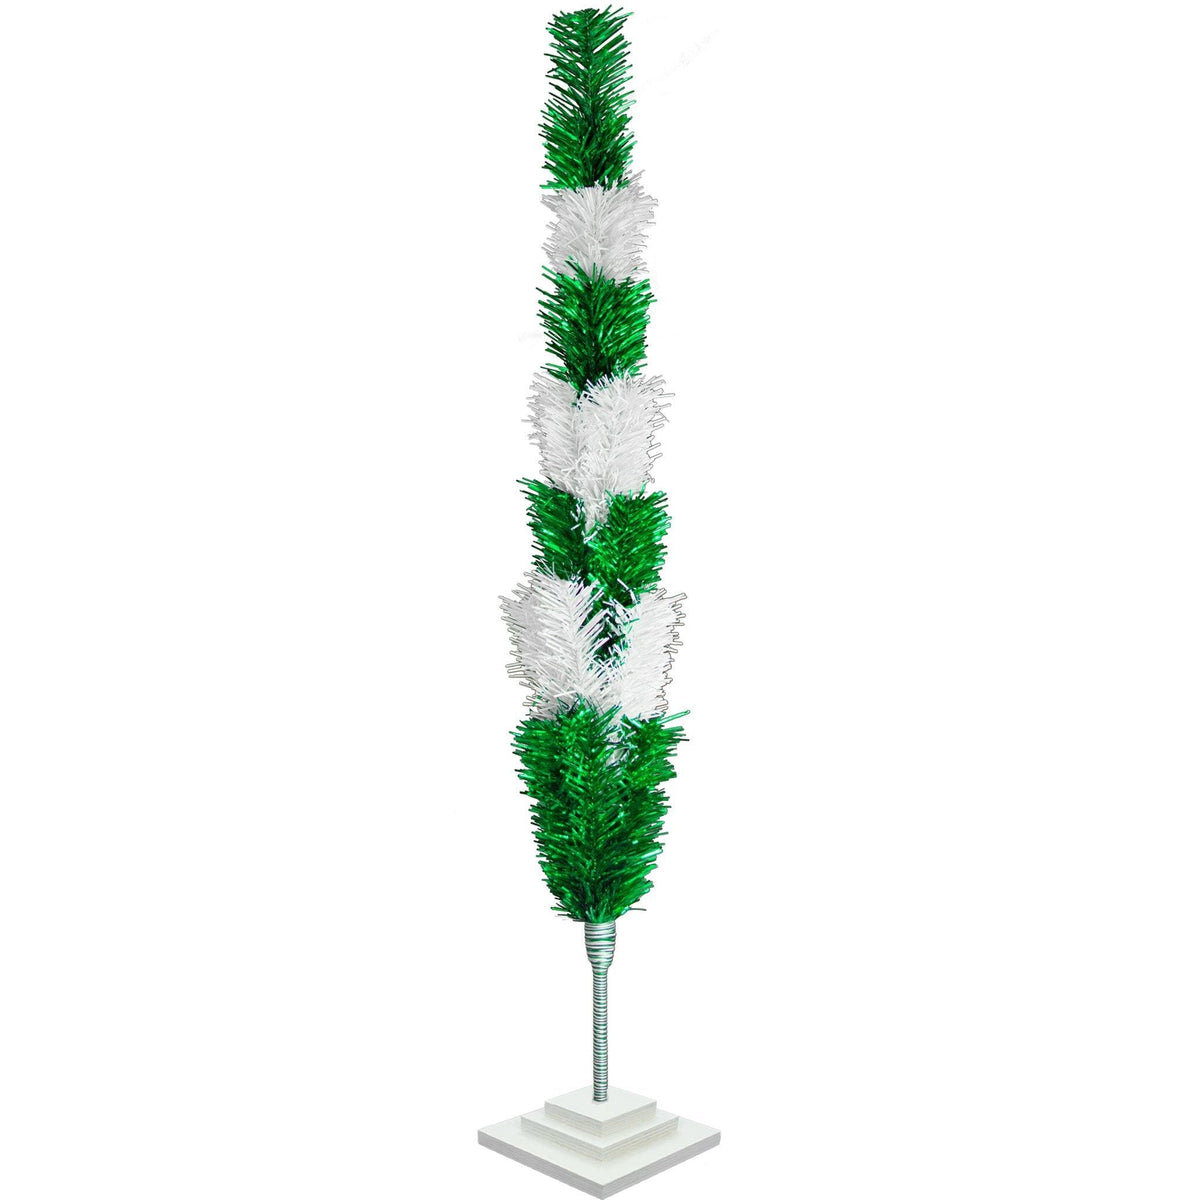 Green & White Layered Tinsel Christmas Trees on sale at leedisplay.com